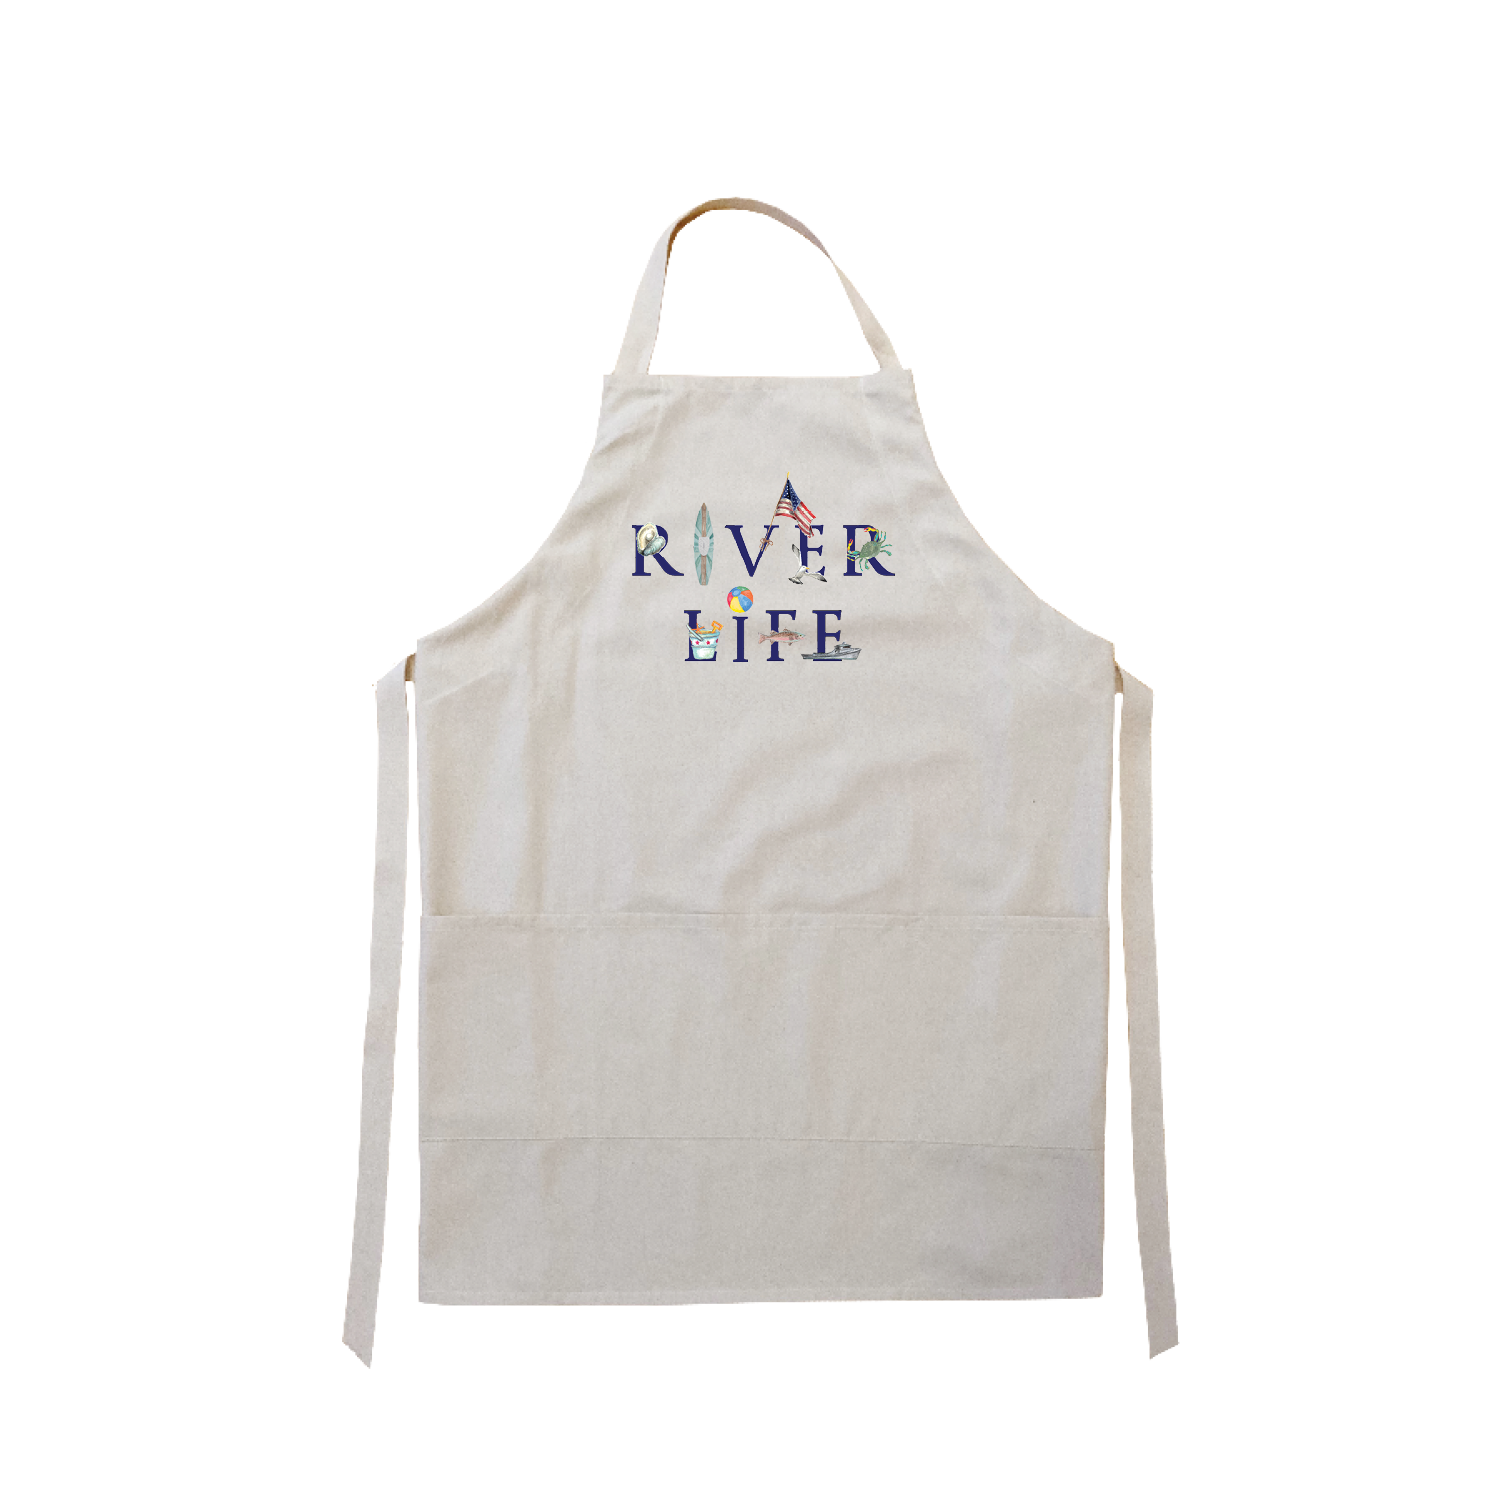 river life apron